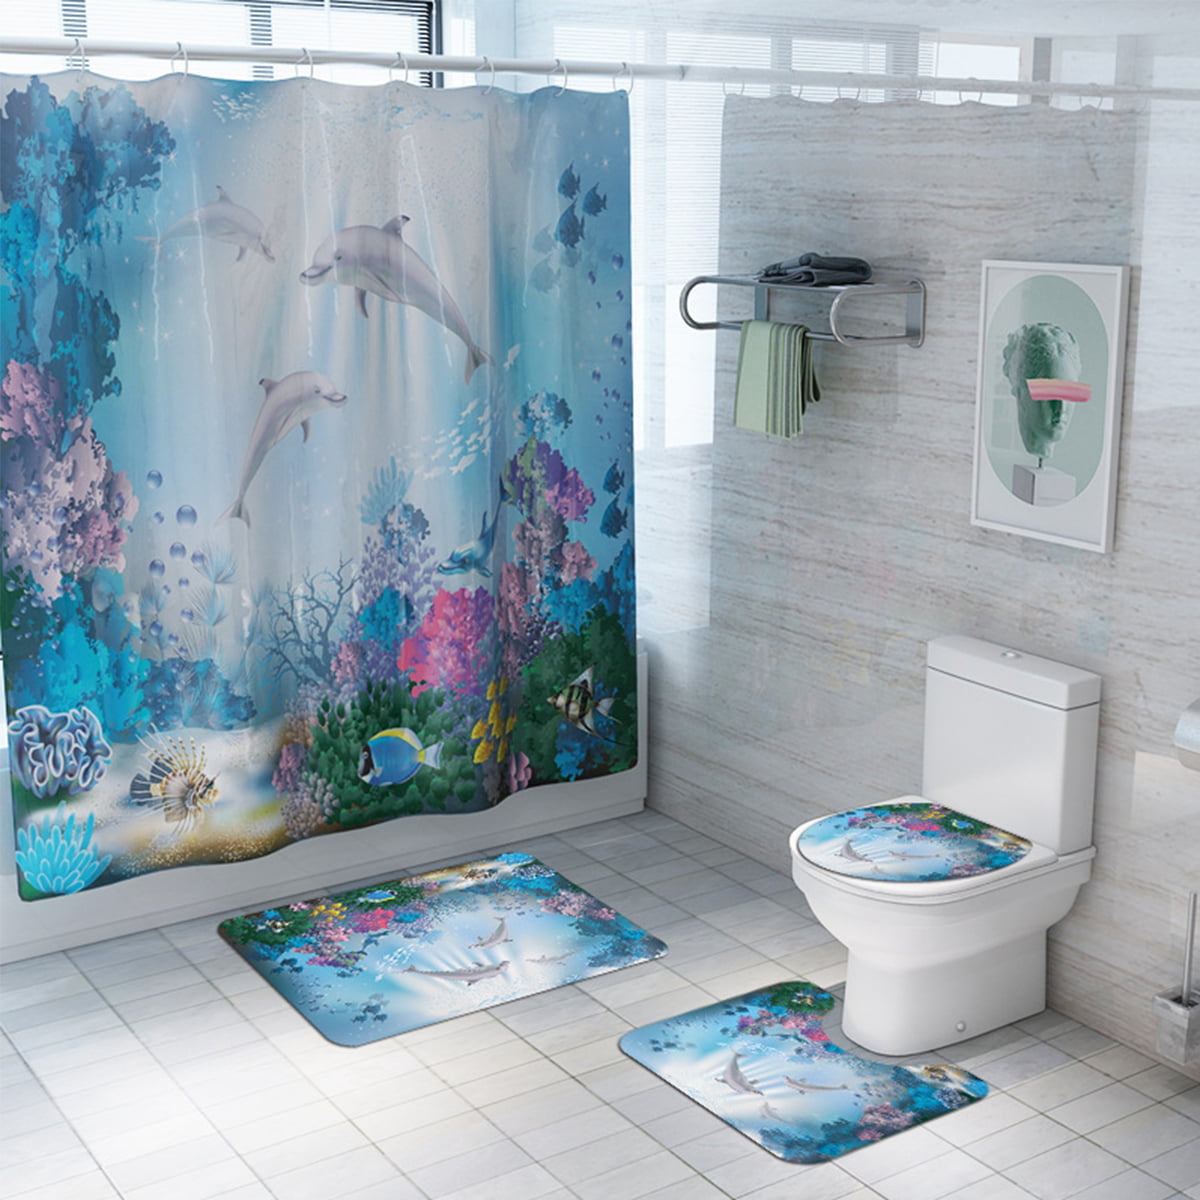 2021 Batman Bathroom 4PCS Rugs Set Shower Curtain Set Non-Slip Toilet Lid Cover 